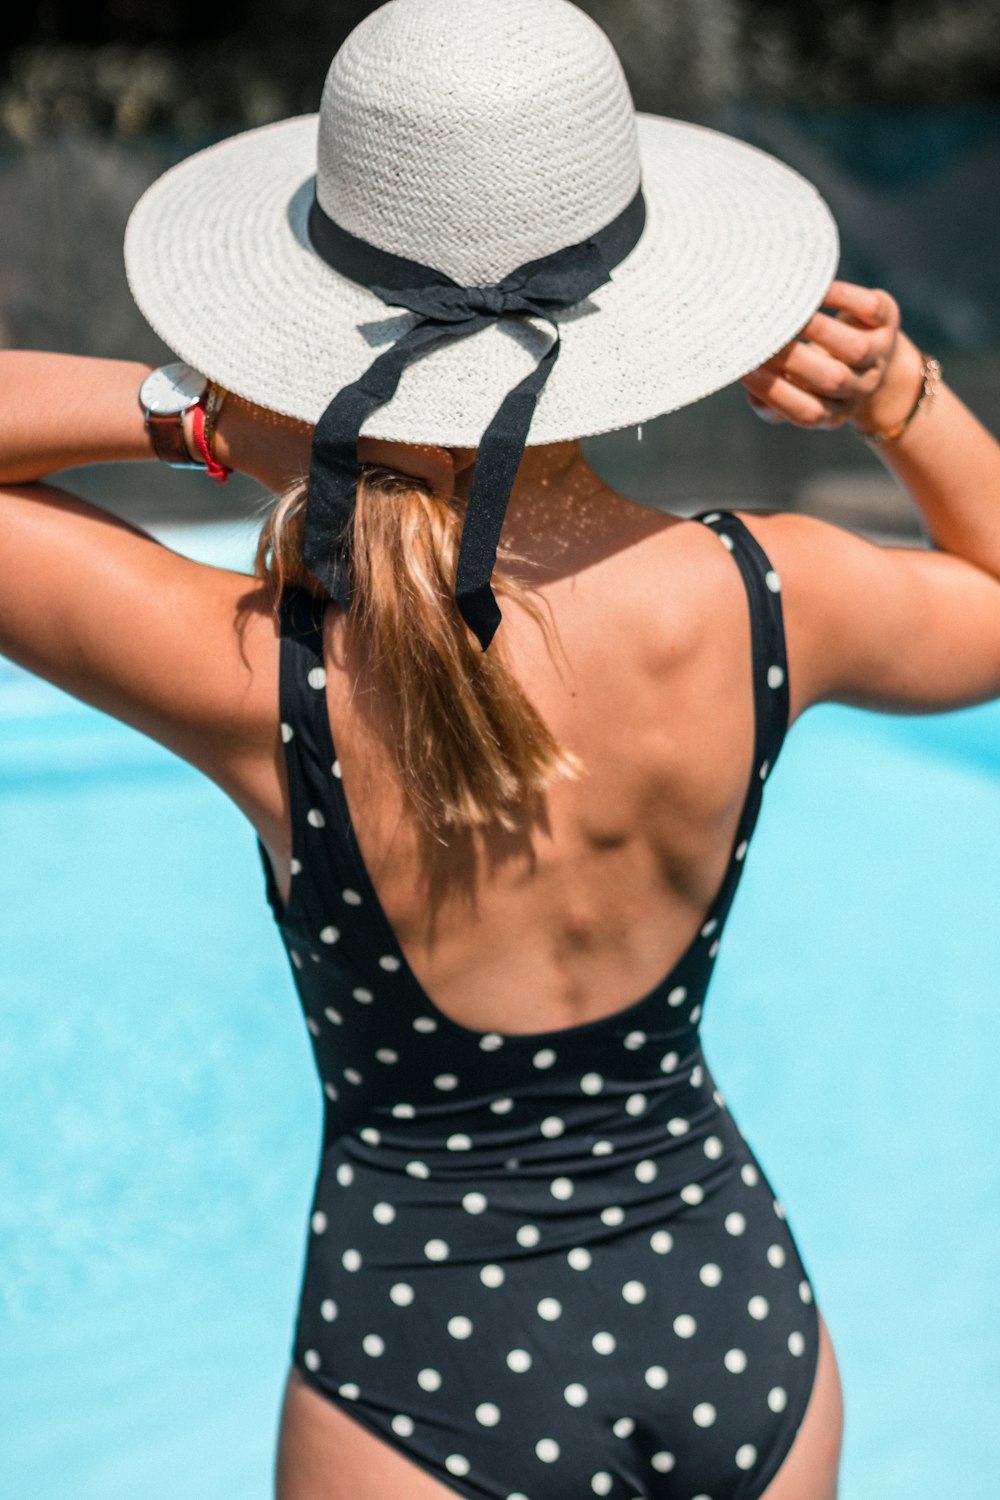 woman in black and white polka dot spaghetti strap top wearing white sun hat